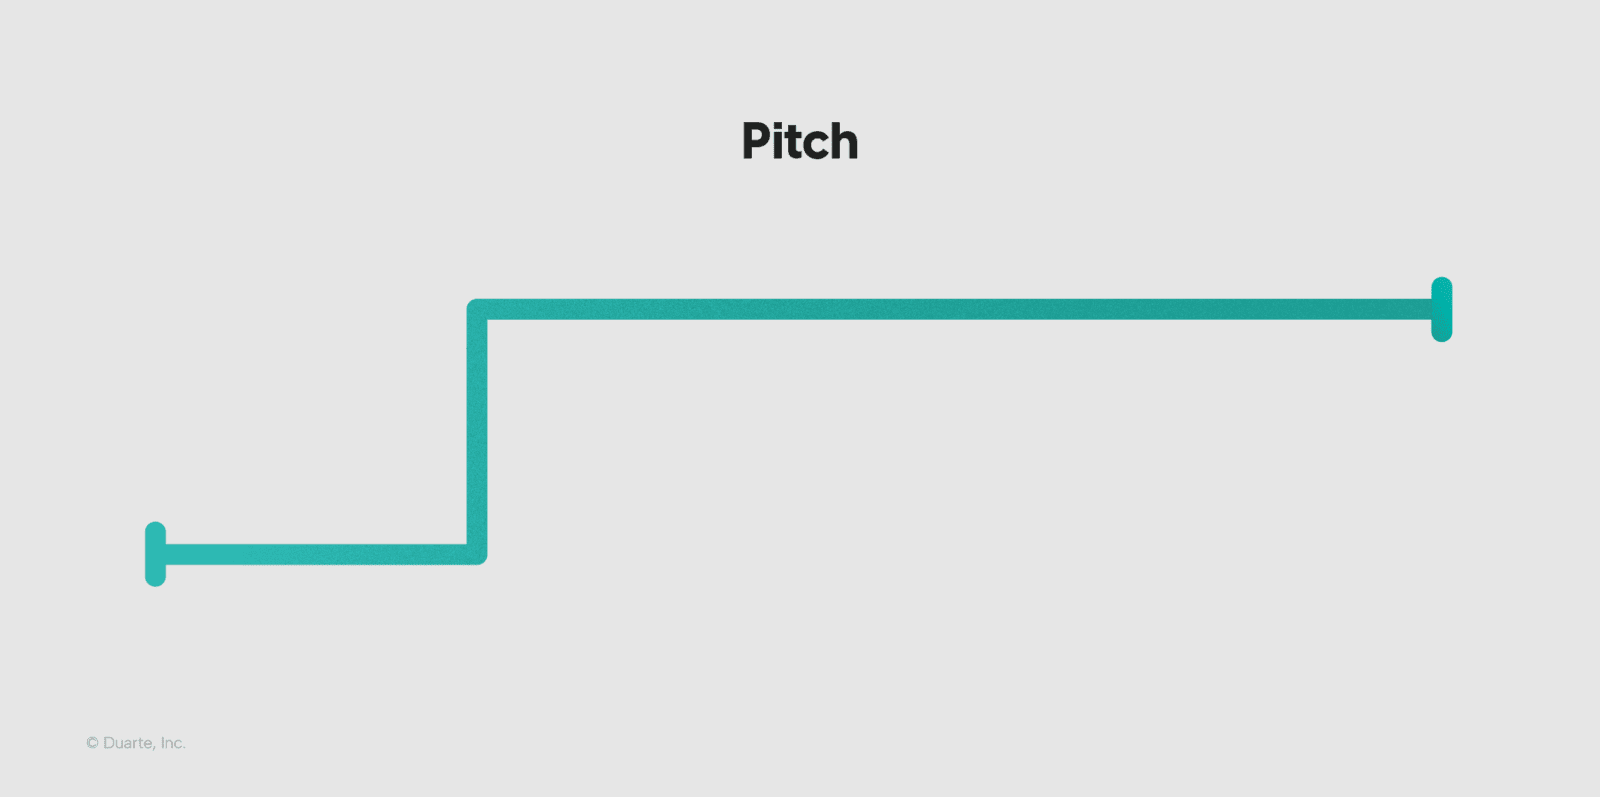 Presentation-sparkline-pitch-example